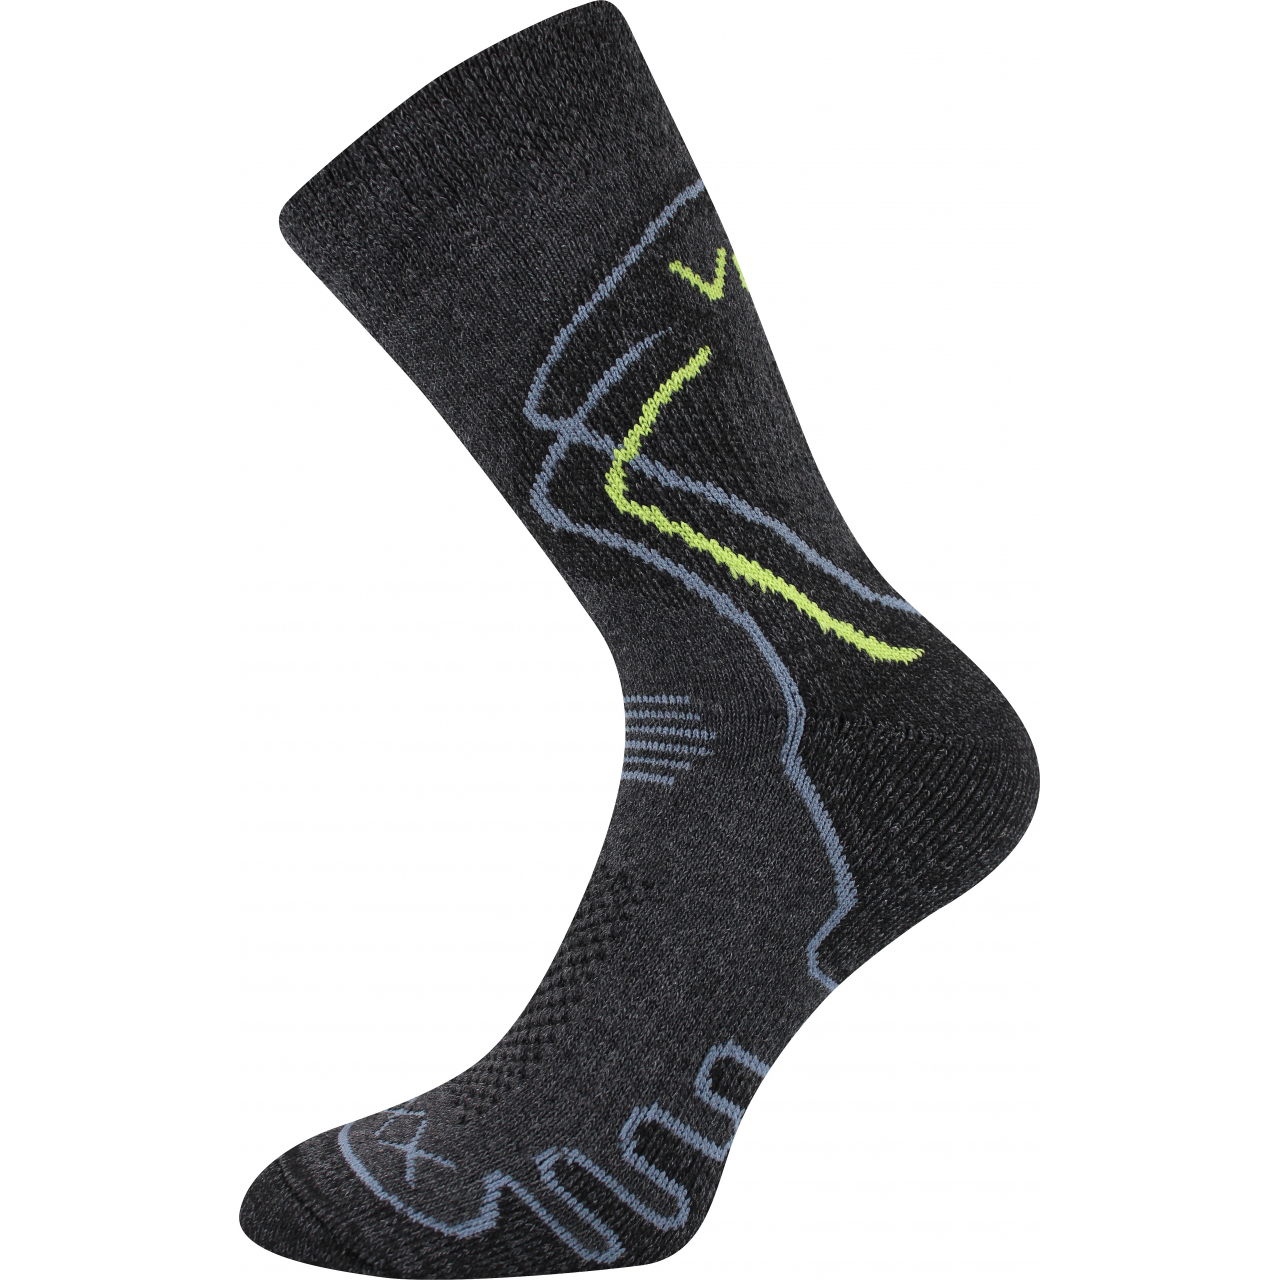 Ponožky trekingové unisex Voxx Limit III - tmavě šedé, 35-38